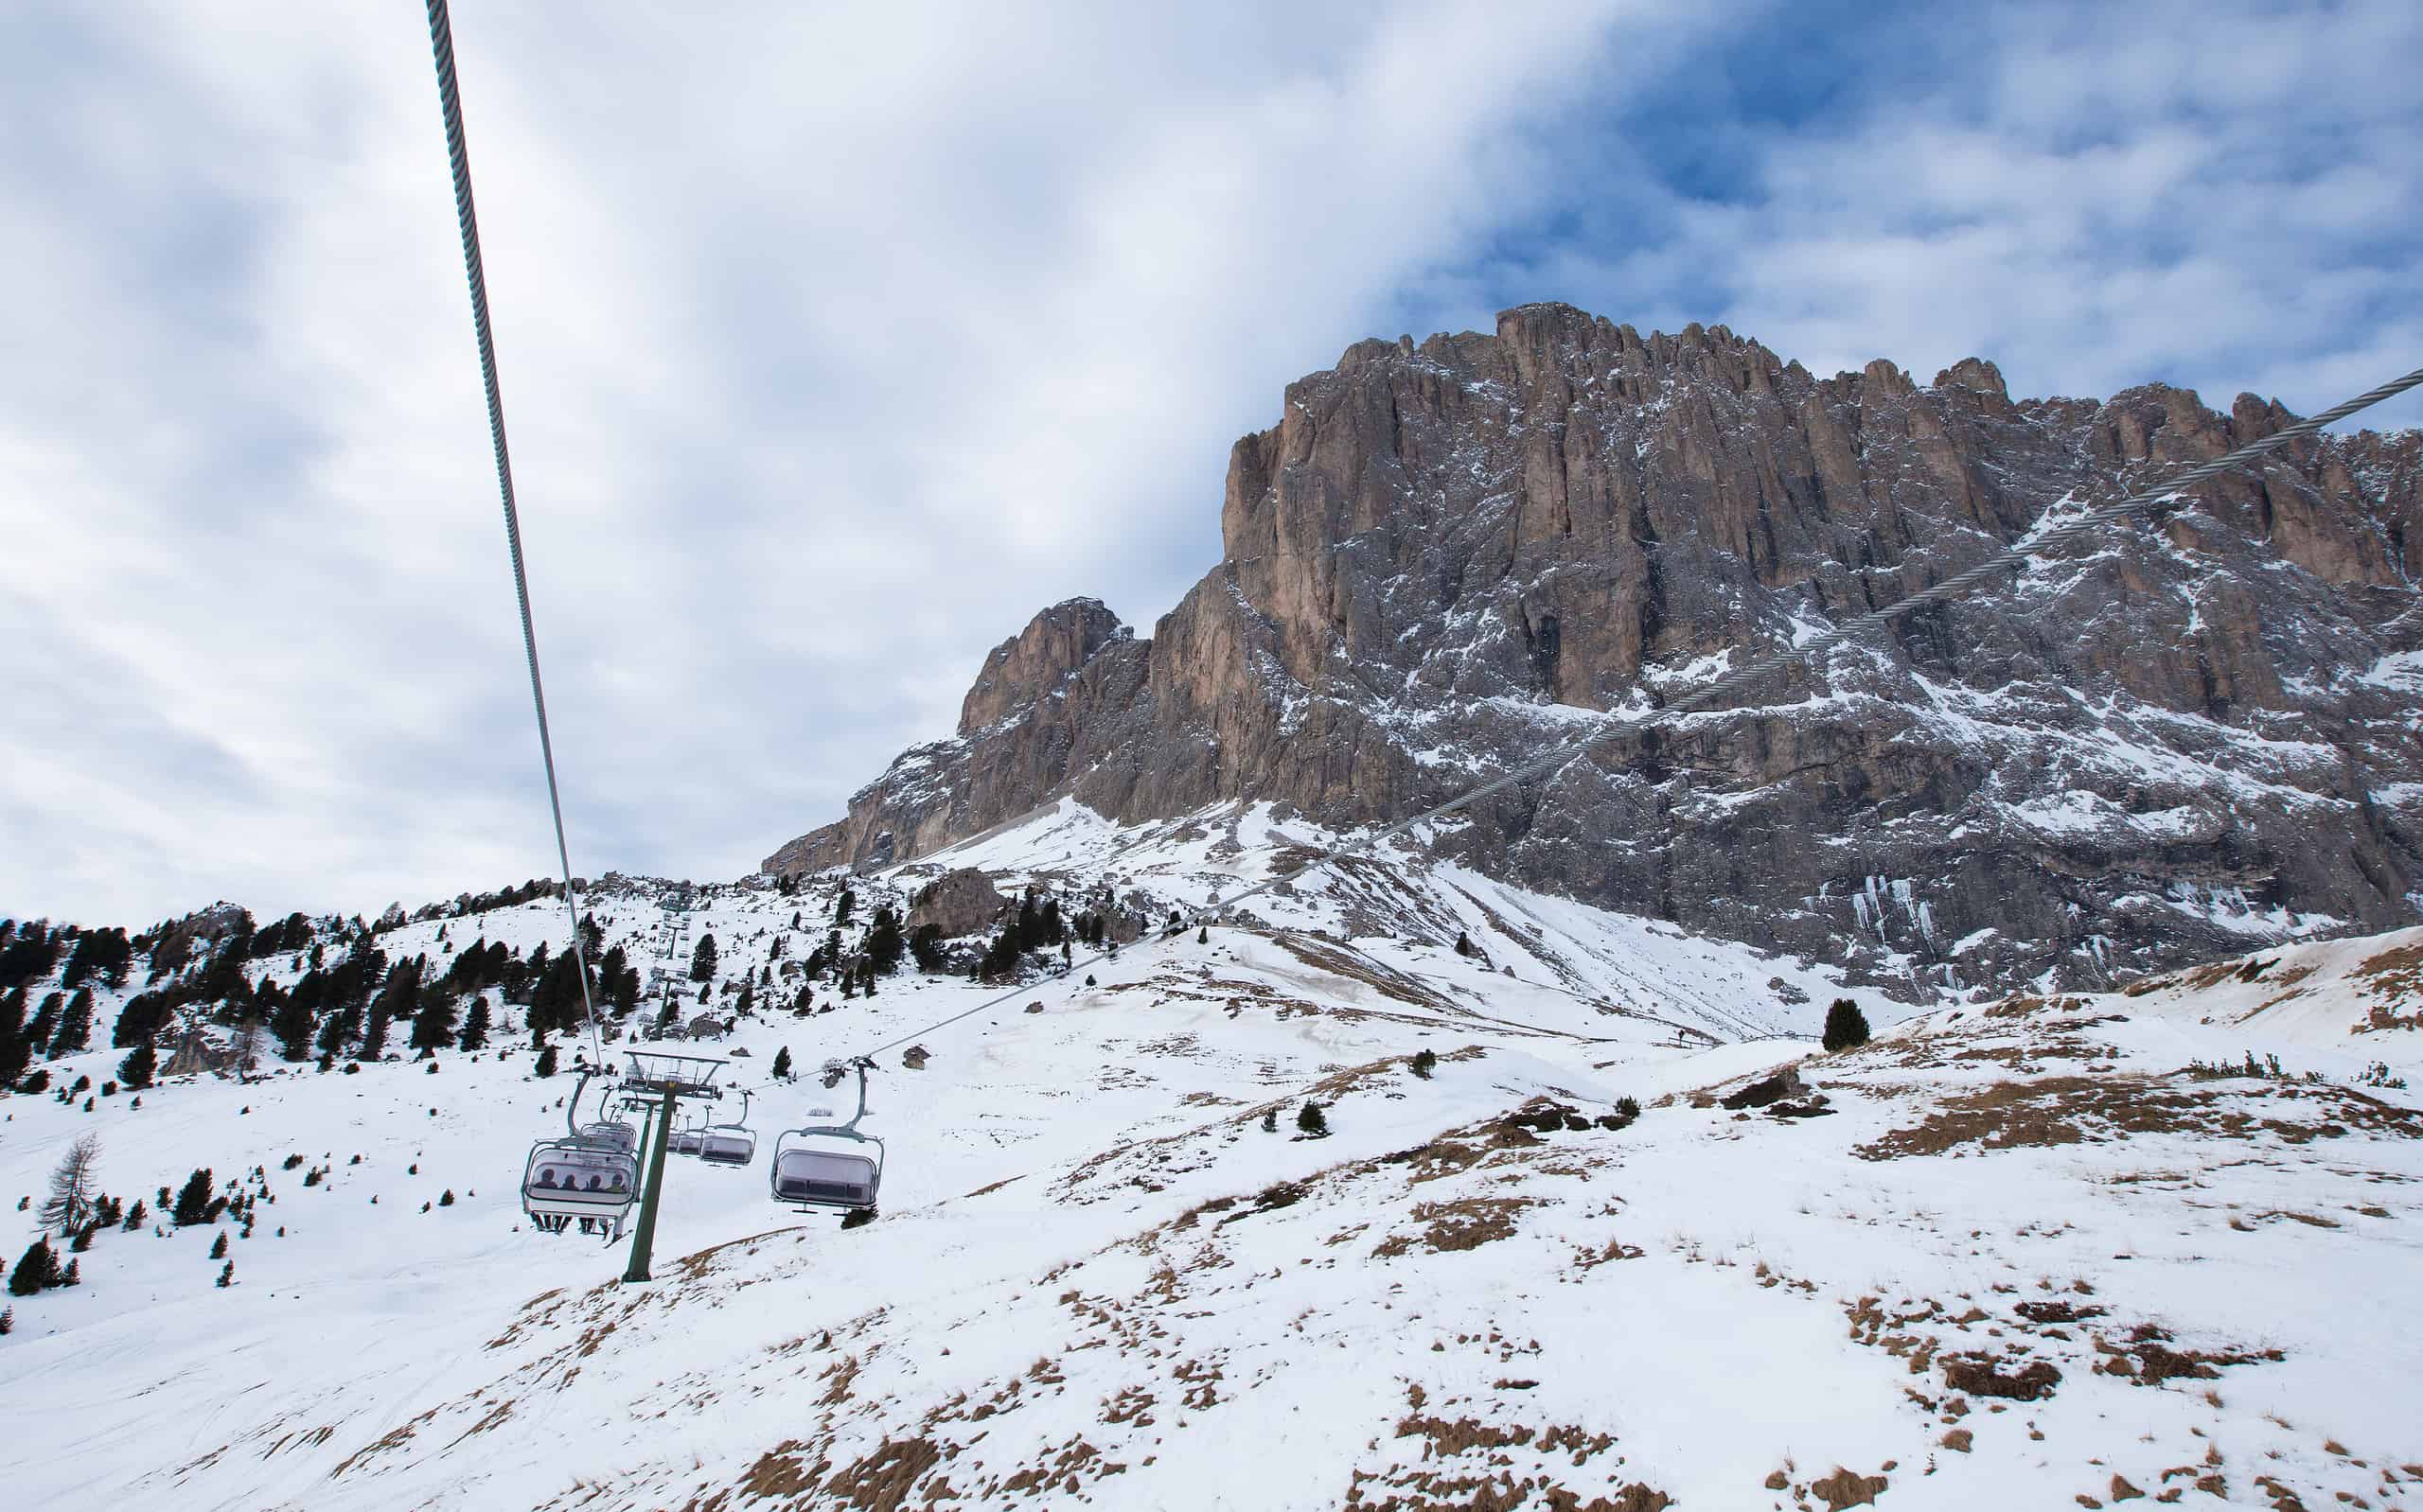 Ski lift to Saslong skiing area, Dolomiti, Val Gardena, Italy